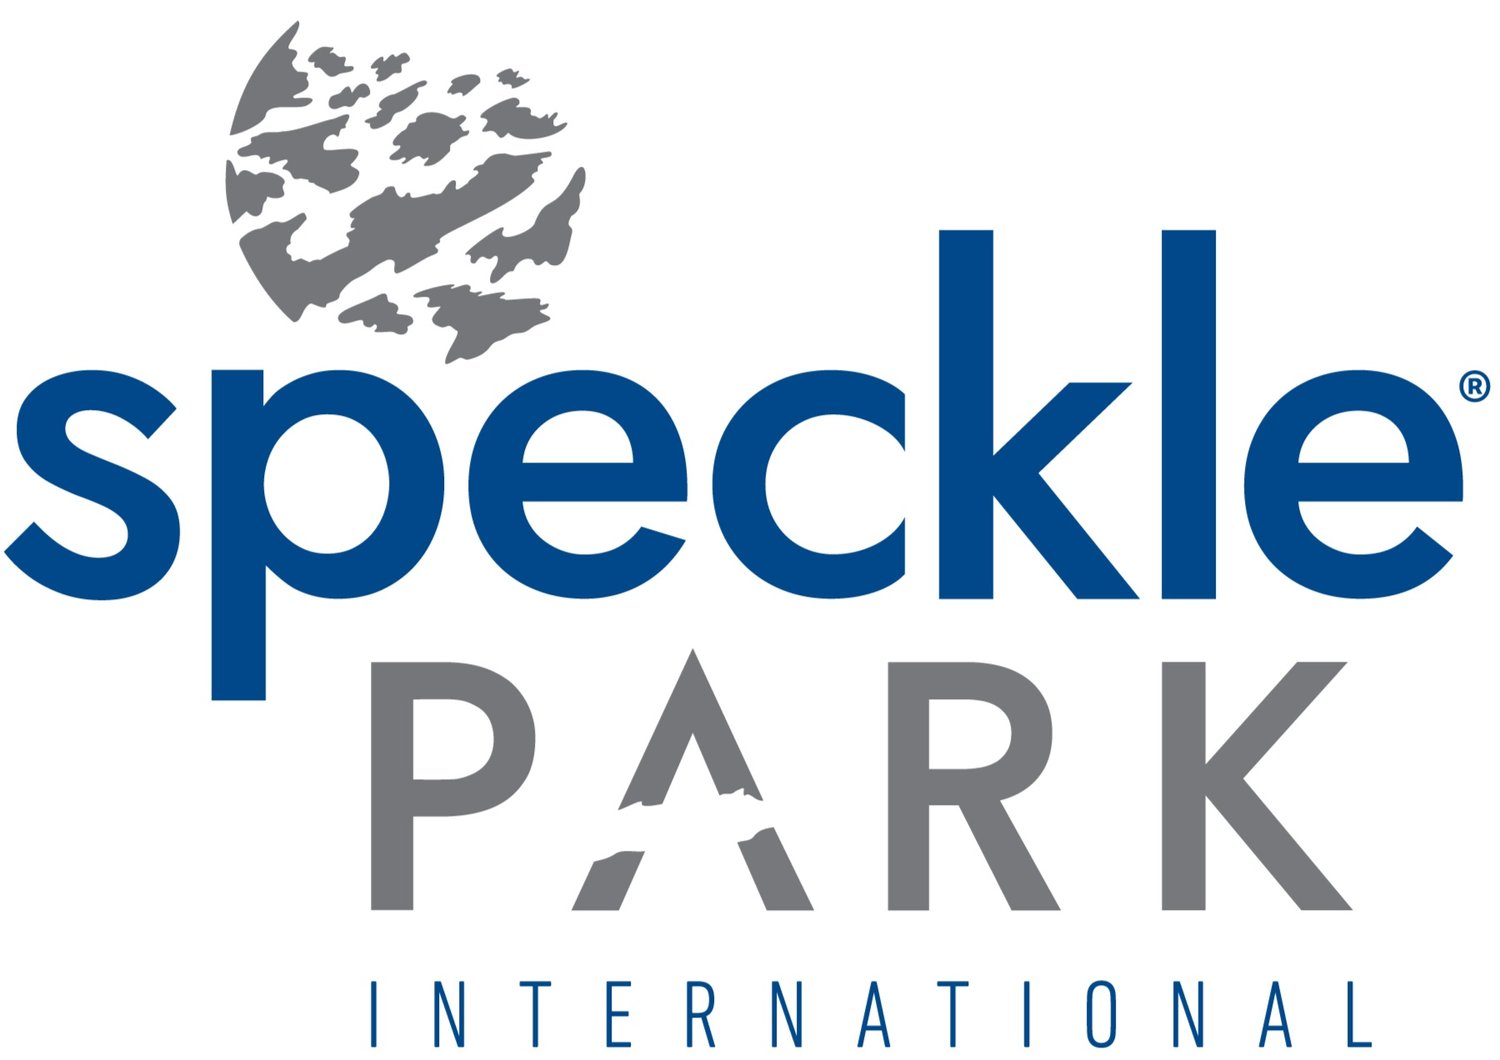 Speckle Park International